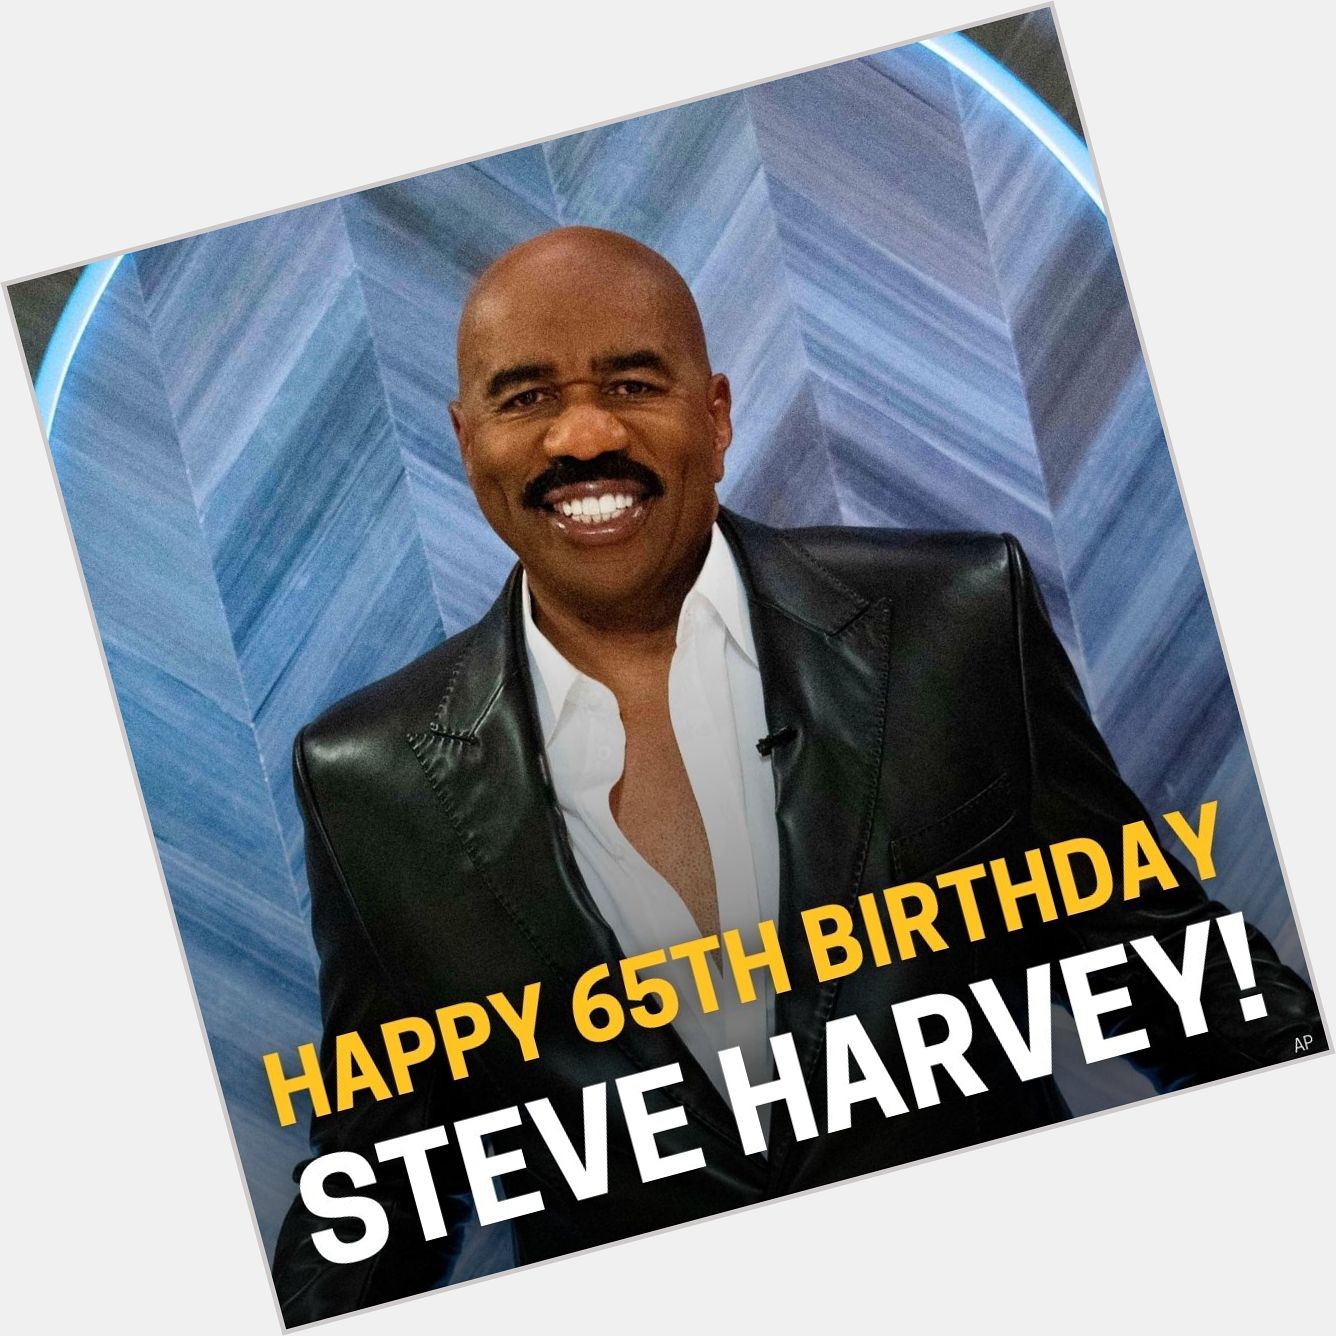 Happy birthday Steve Harvey! 